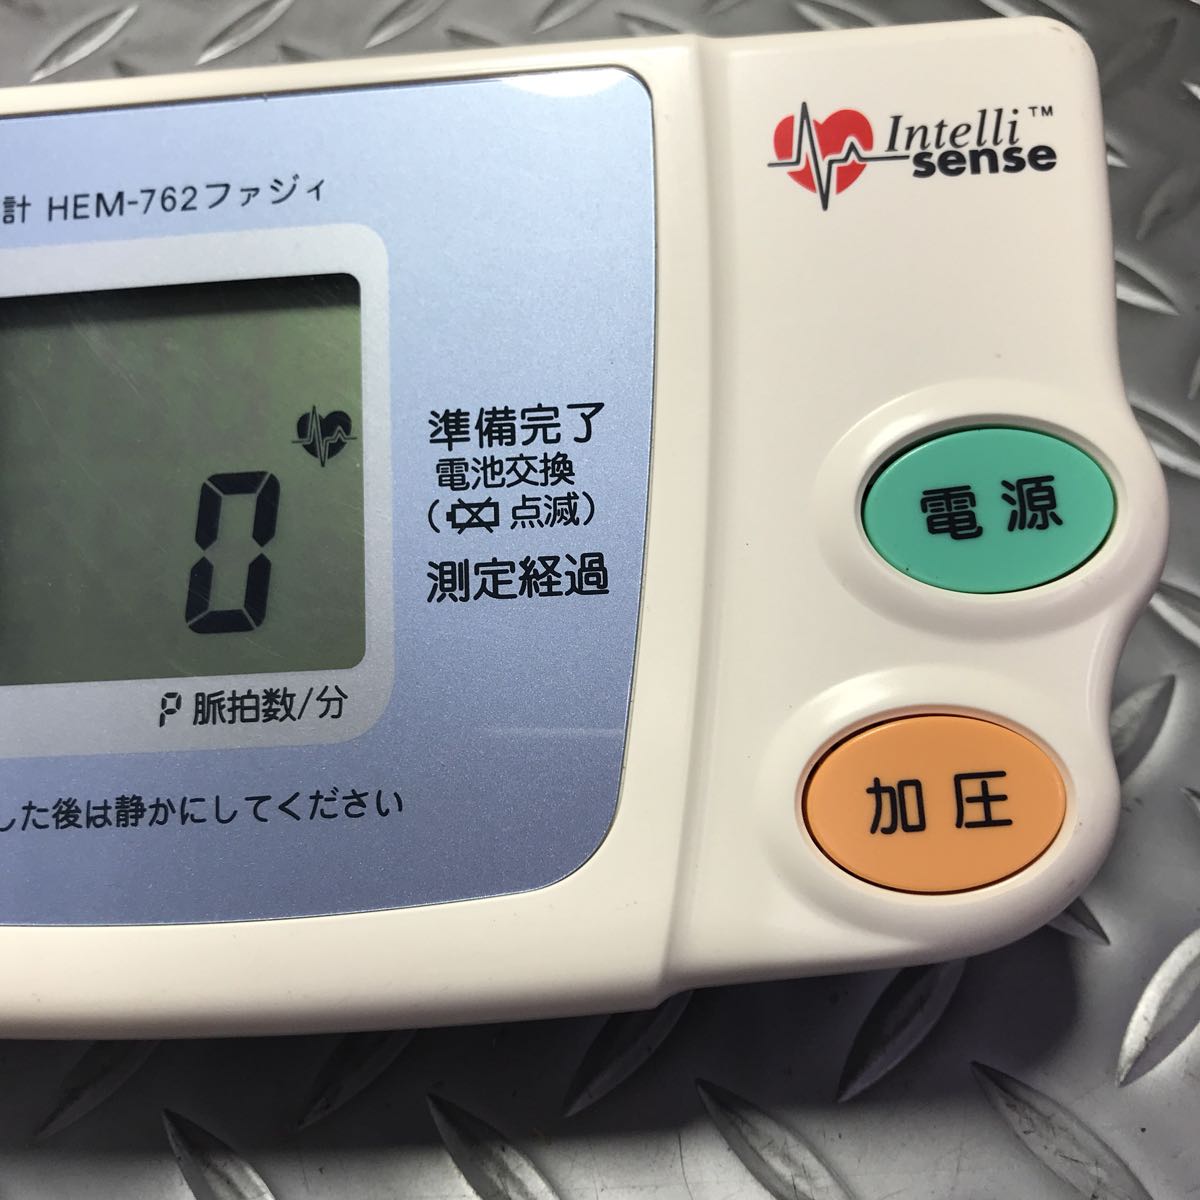 TAD7387 OMRON Omron digital automatic hemadynamometer HEM-762faji. Intell sense hemadynamometer most high blood pressure error part removing. person please 